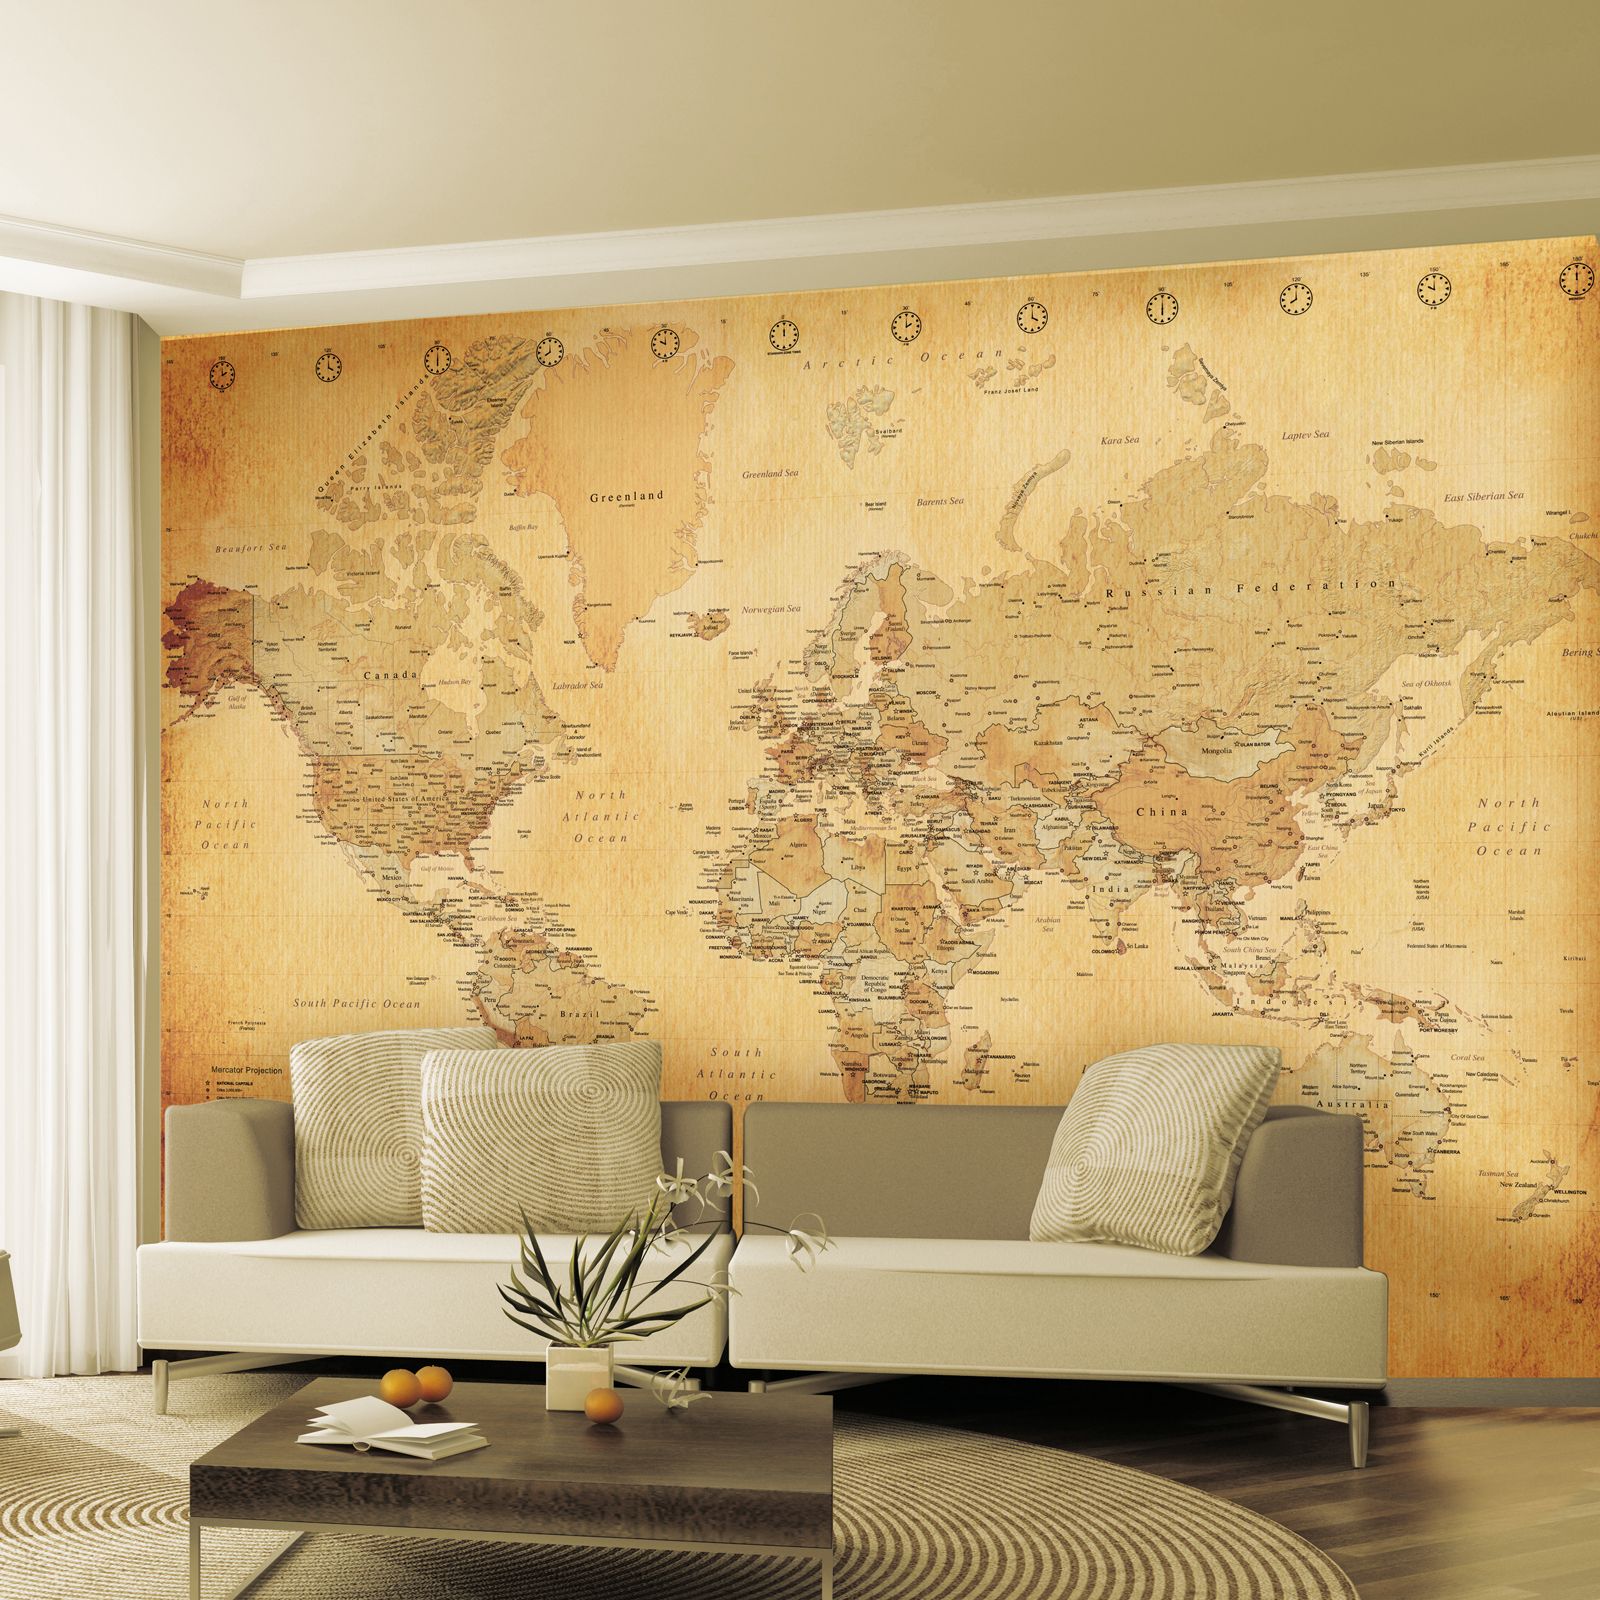 large wallpaper murals,wallpaper,wall,room,interior design,wall sticker